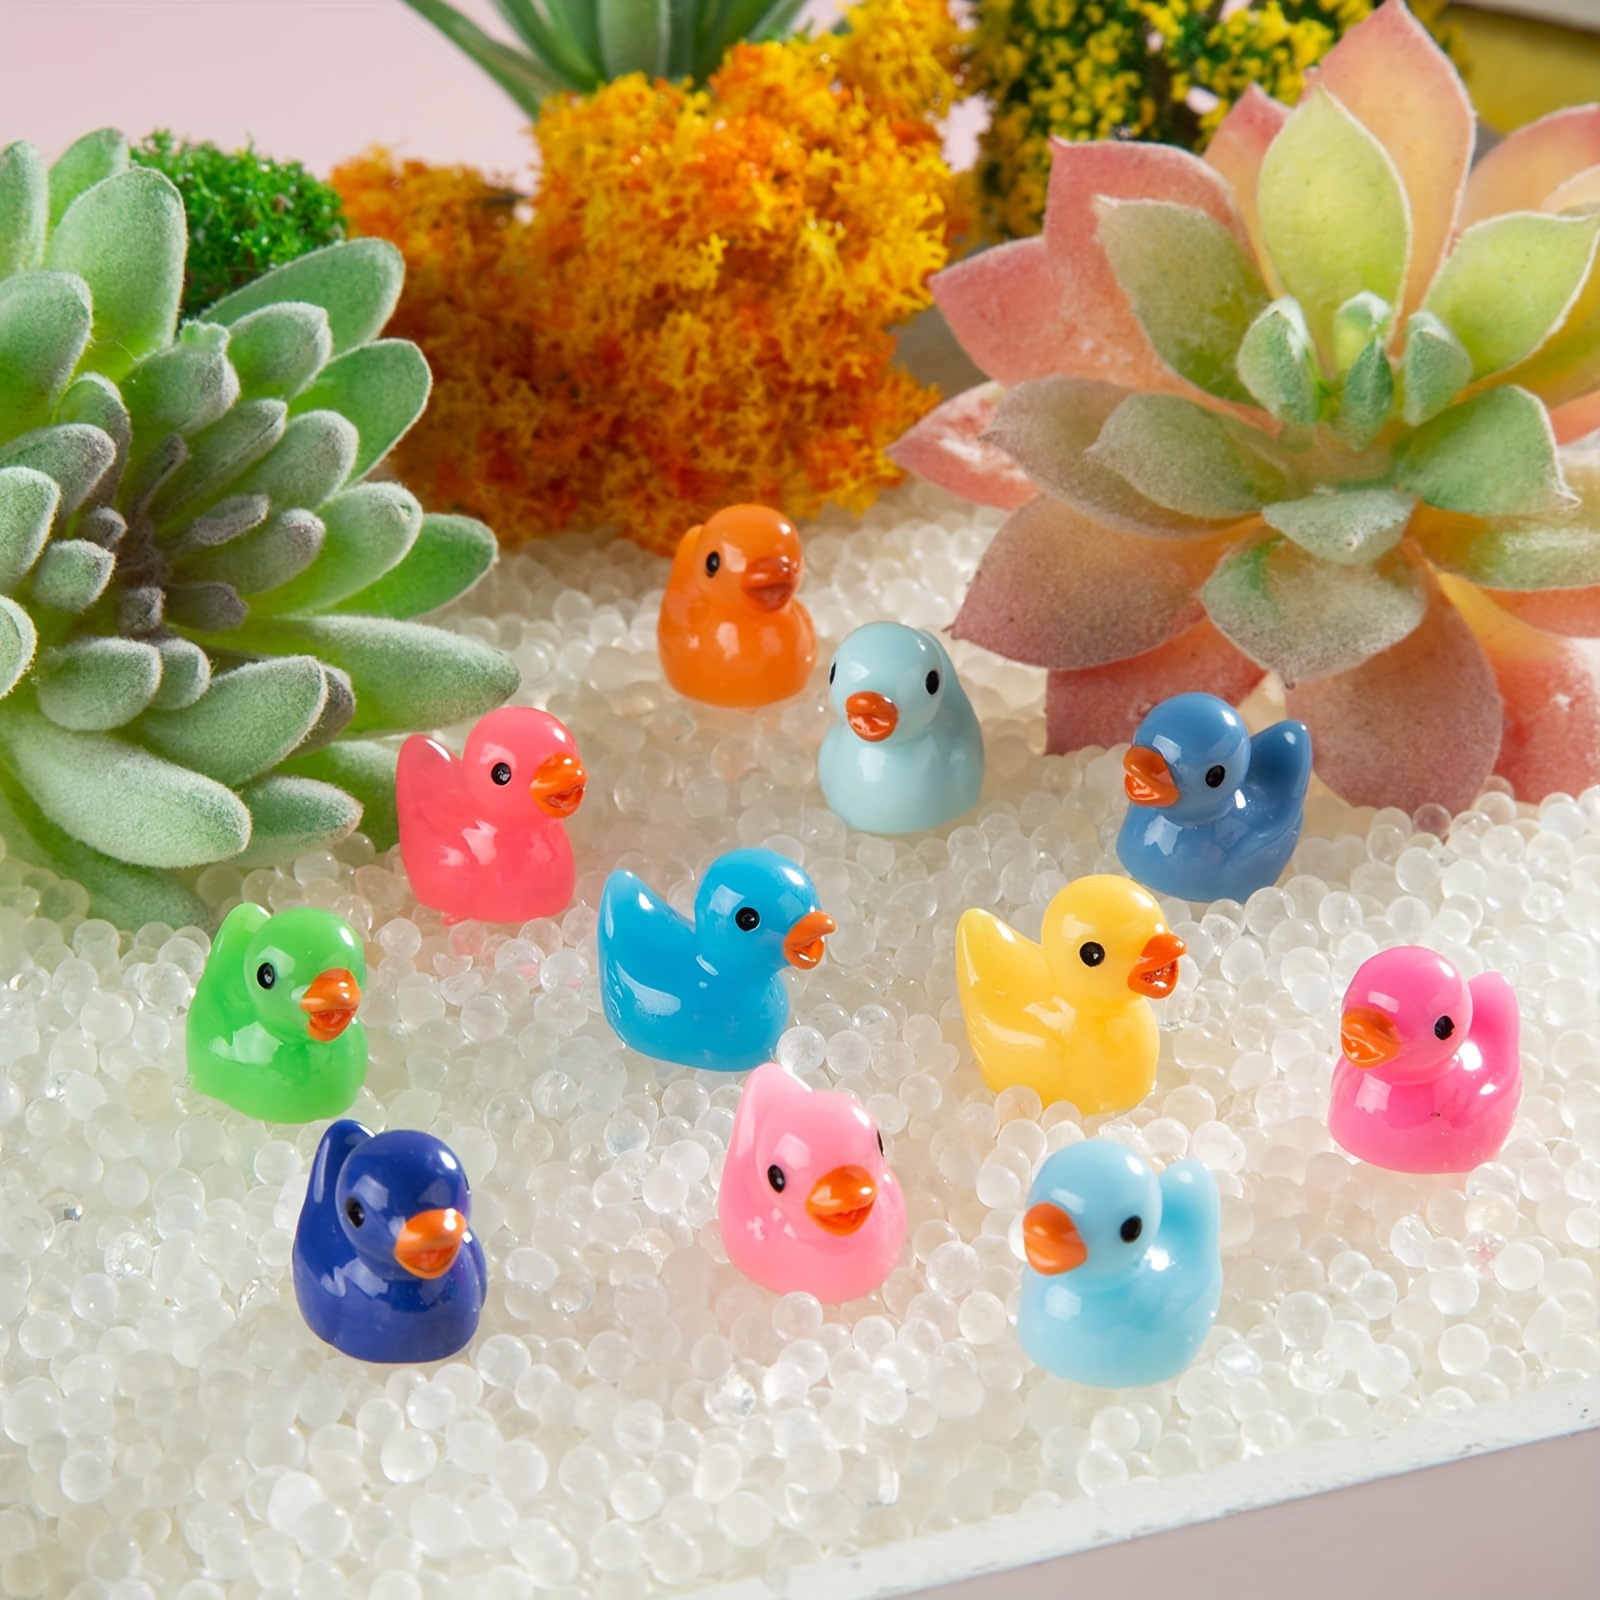 

100pcs Mini Resin Ducks For Crafts, Colorful Tiny Ducks Miniature Figures For Aquarium Garden Landscape Dollhouse Ornament Potted Decorations Diy, Random Colors